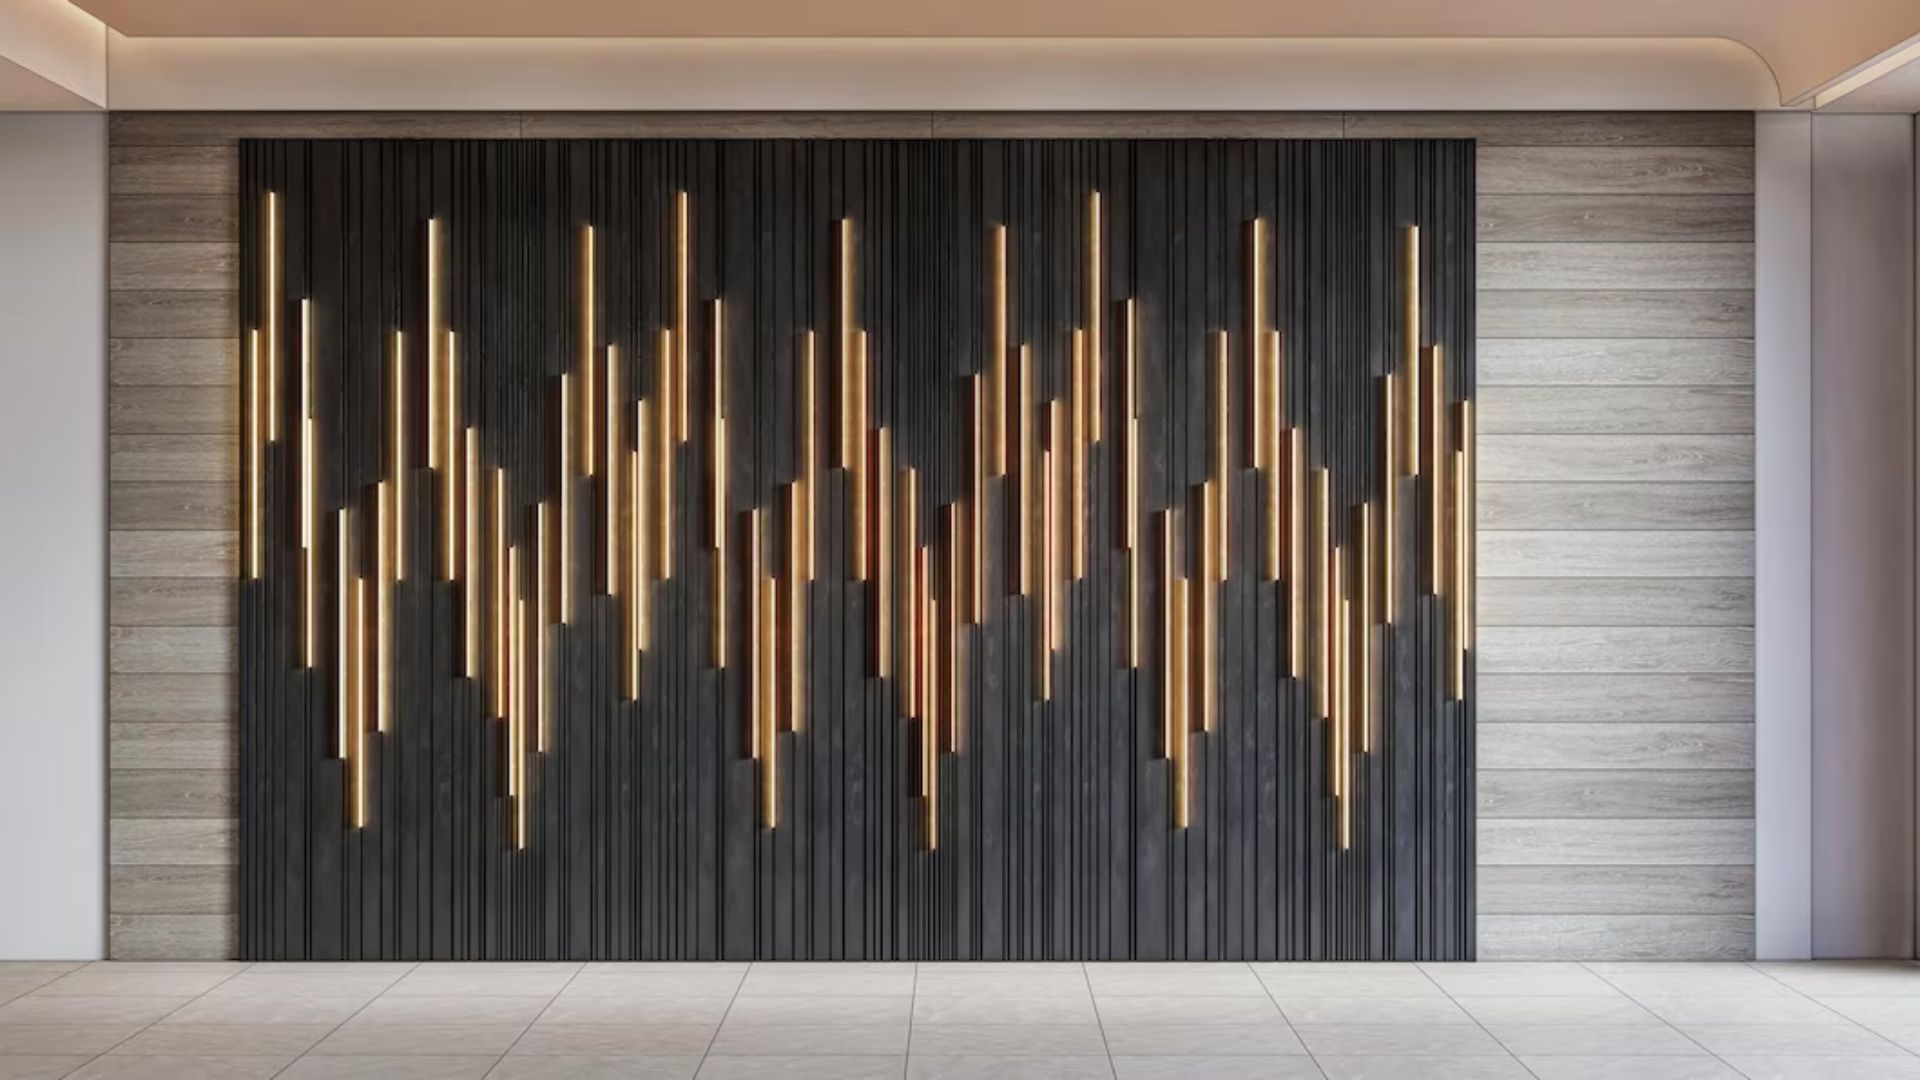 Acoustic wall panels